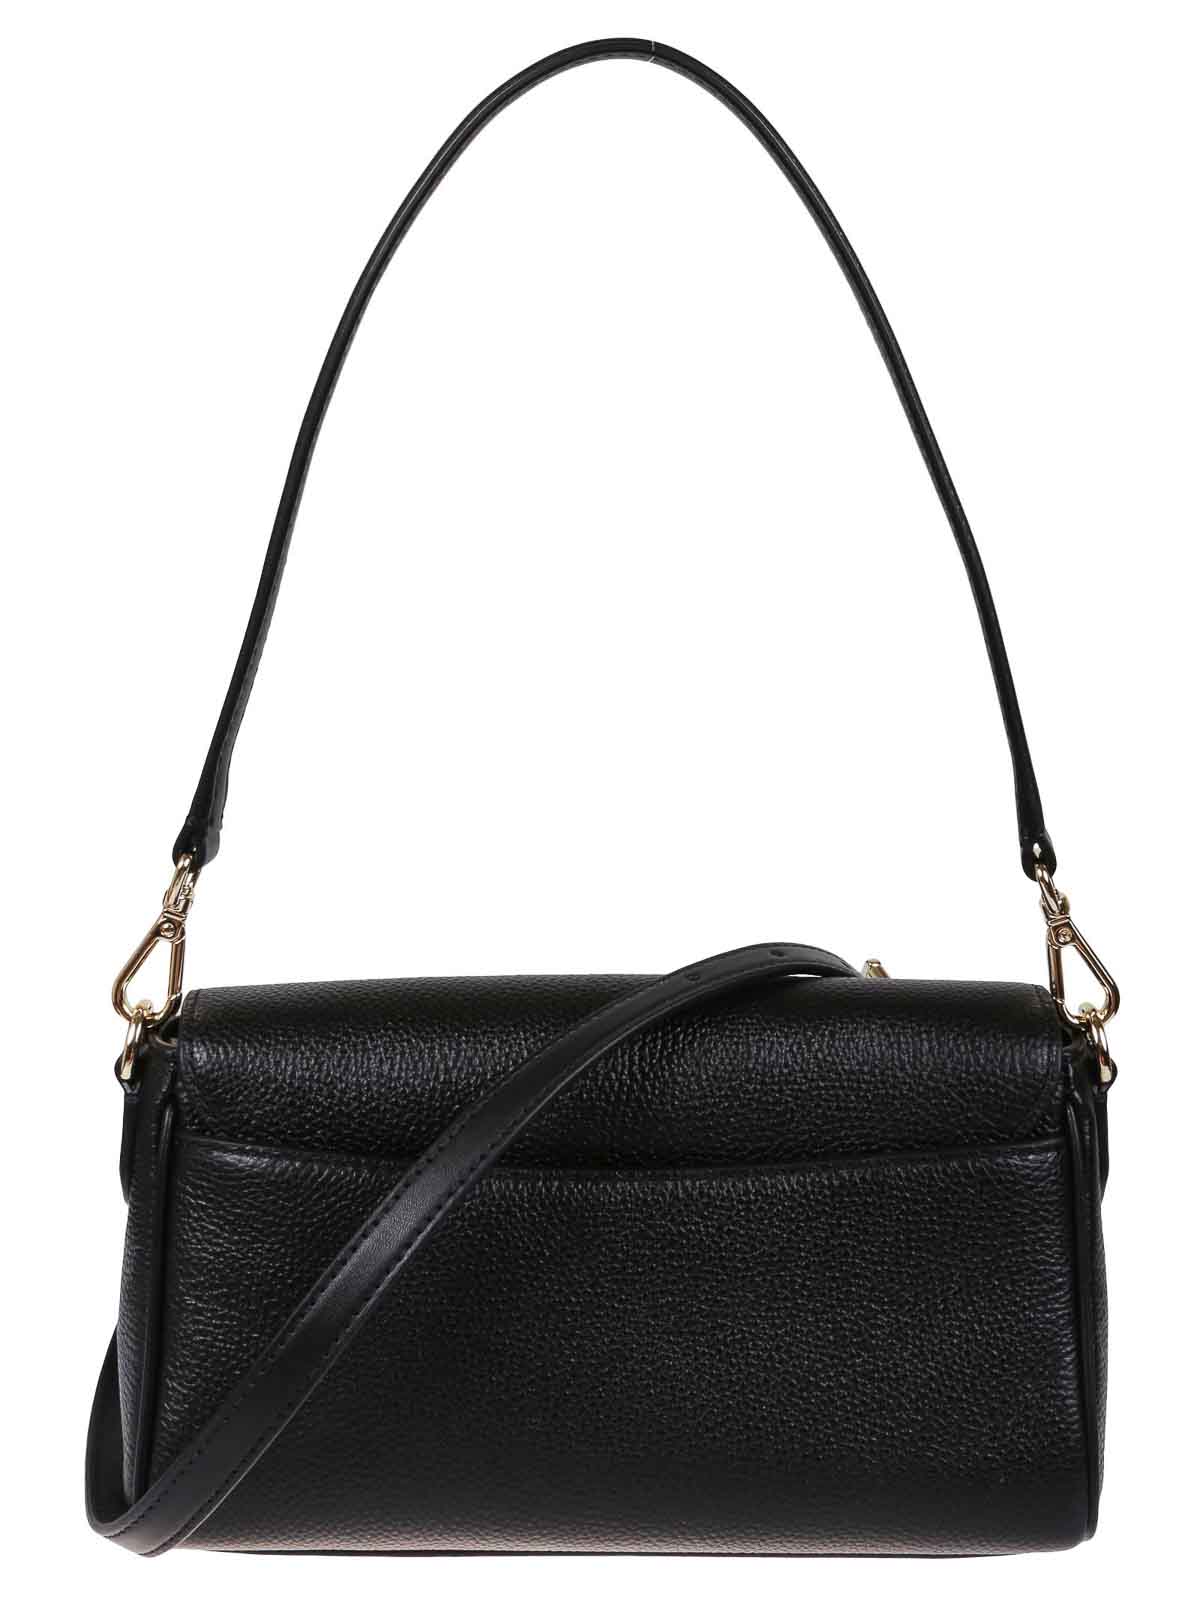 women's pre-owned michael kors handbags purses | eBay